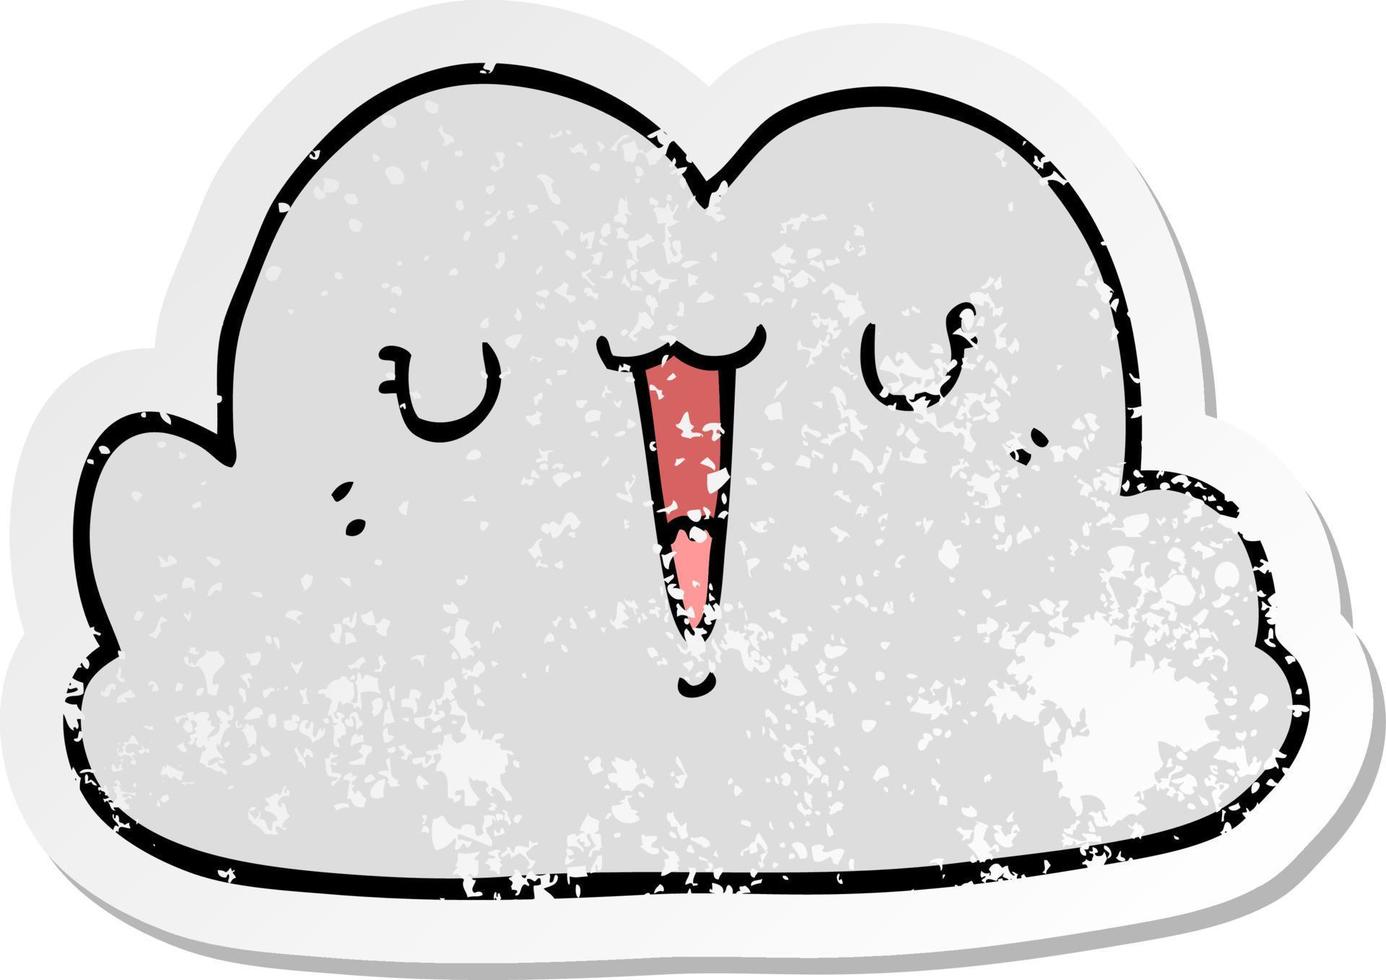 distressed sticker of a cute cartoon cloud vector